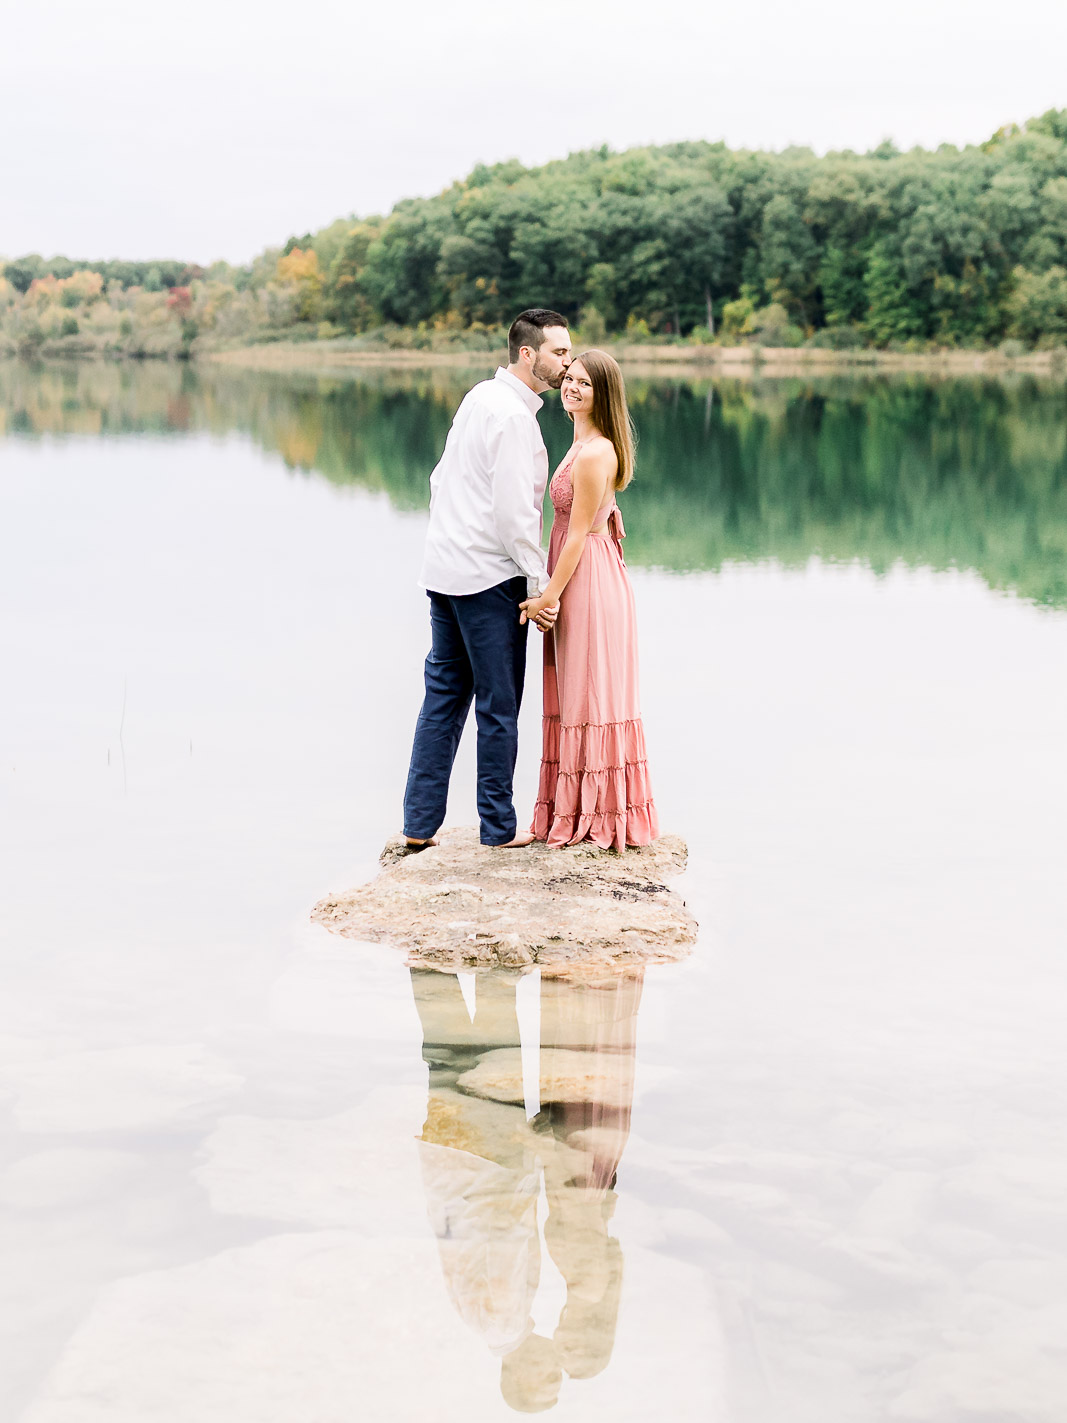 Best Michigan Fenton wedding photographer engagement session seven lakes state park